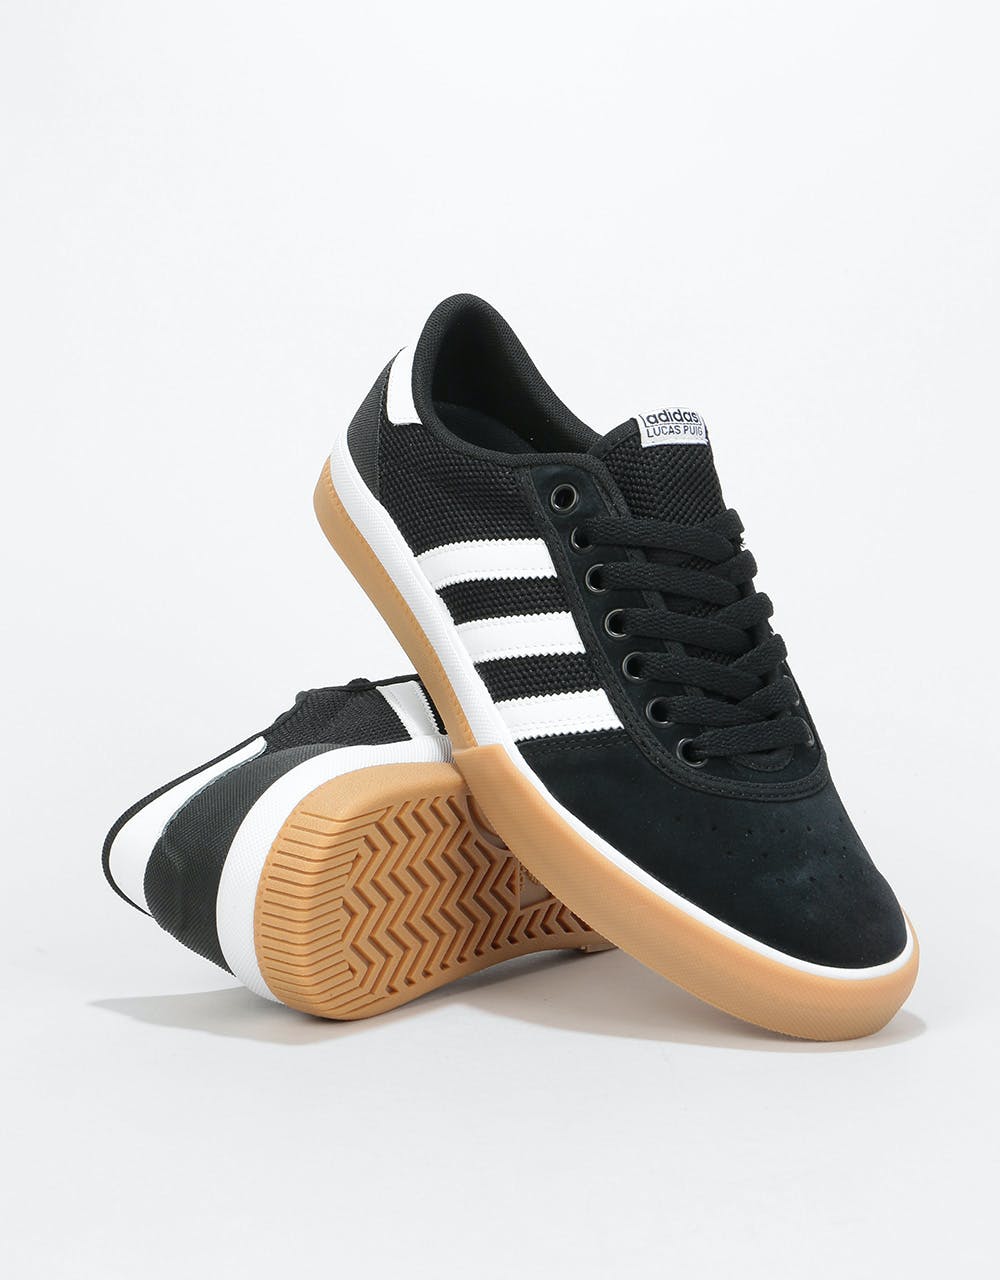 Adidas Lucas Premiere Skate Shoes - Black/White/Gum